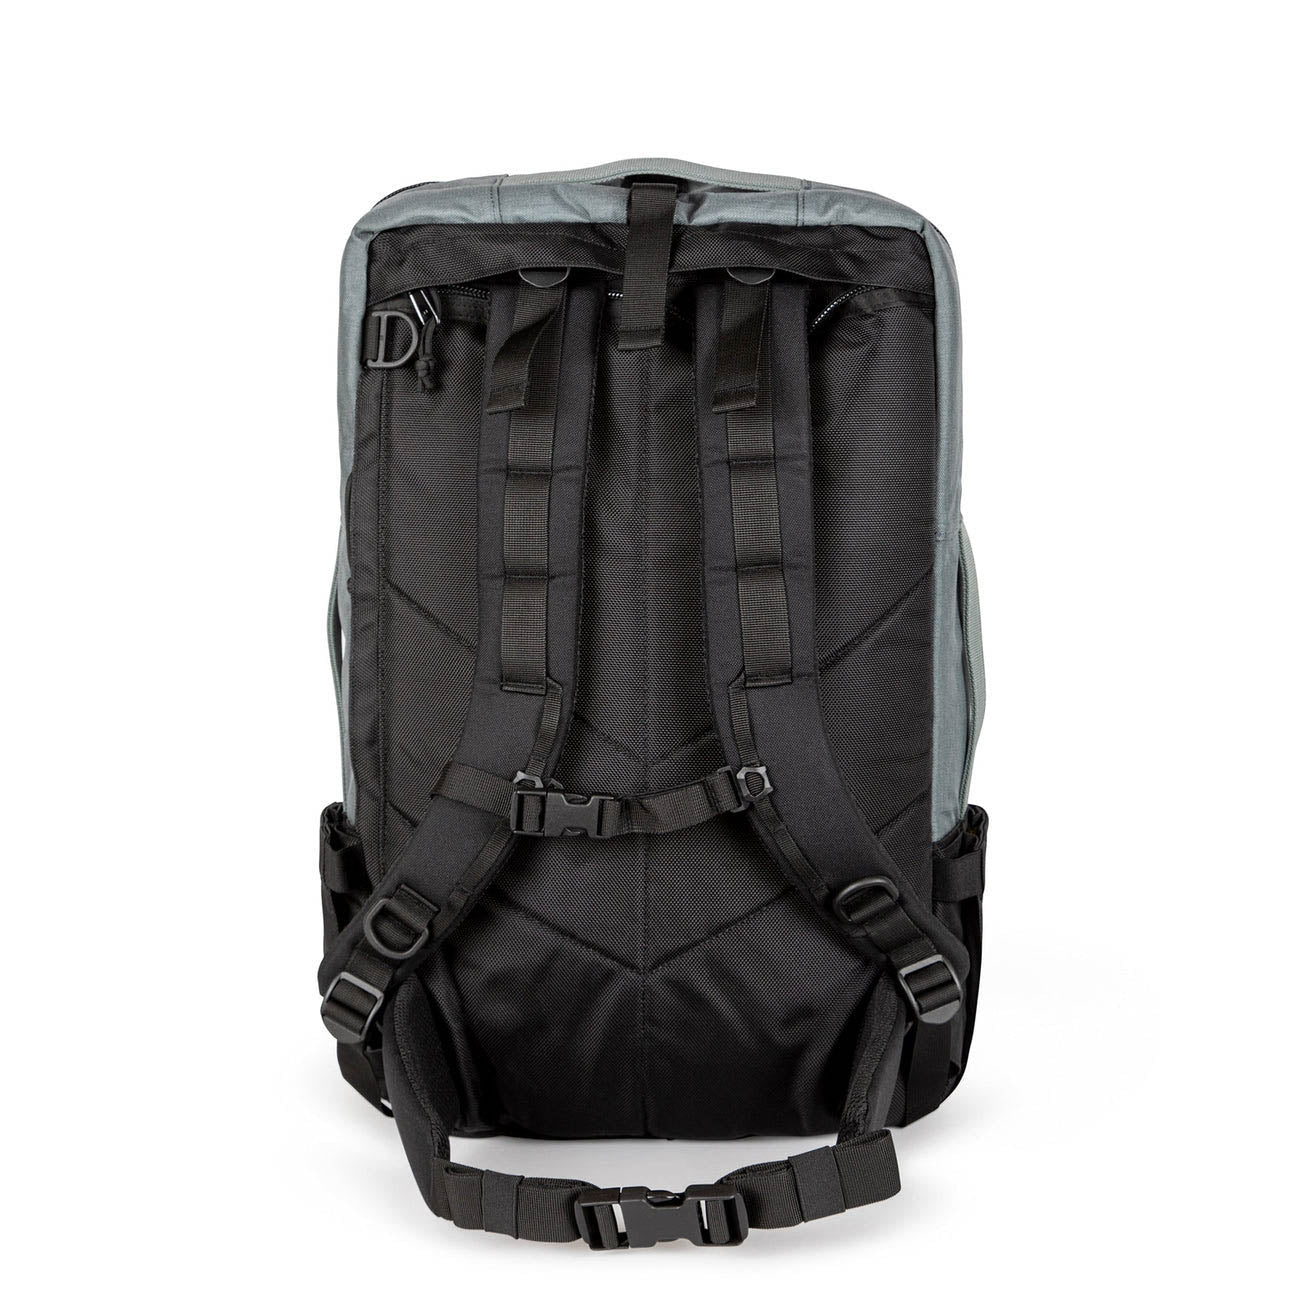 Valise - Global Travel Bag - 40 Litres - Charcoal